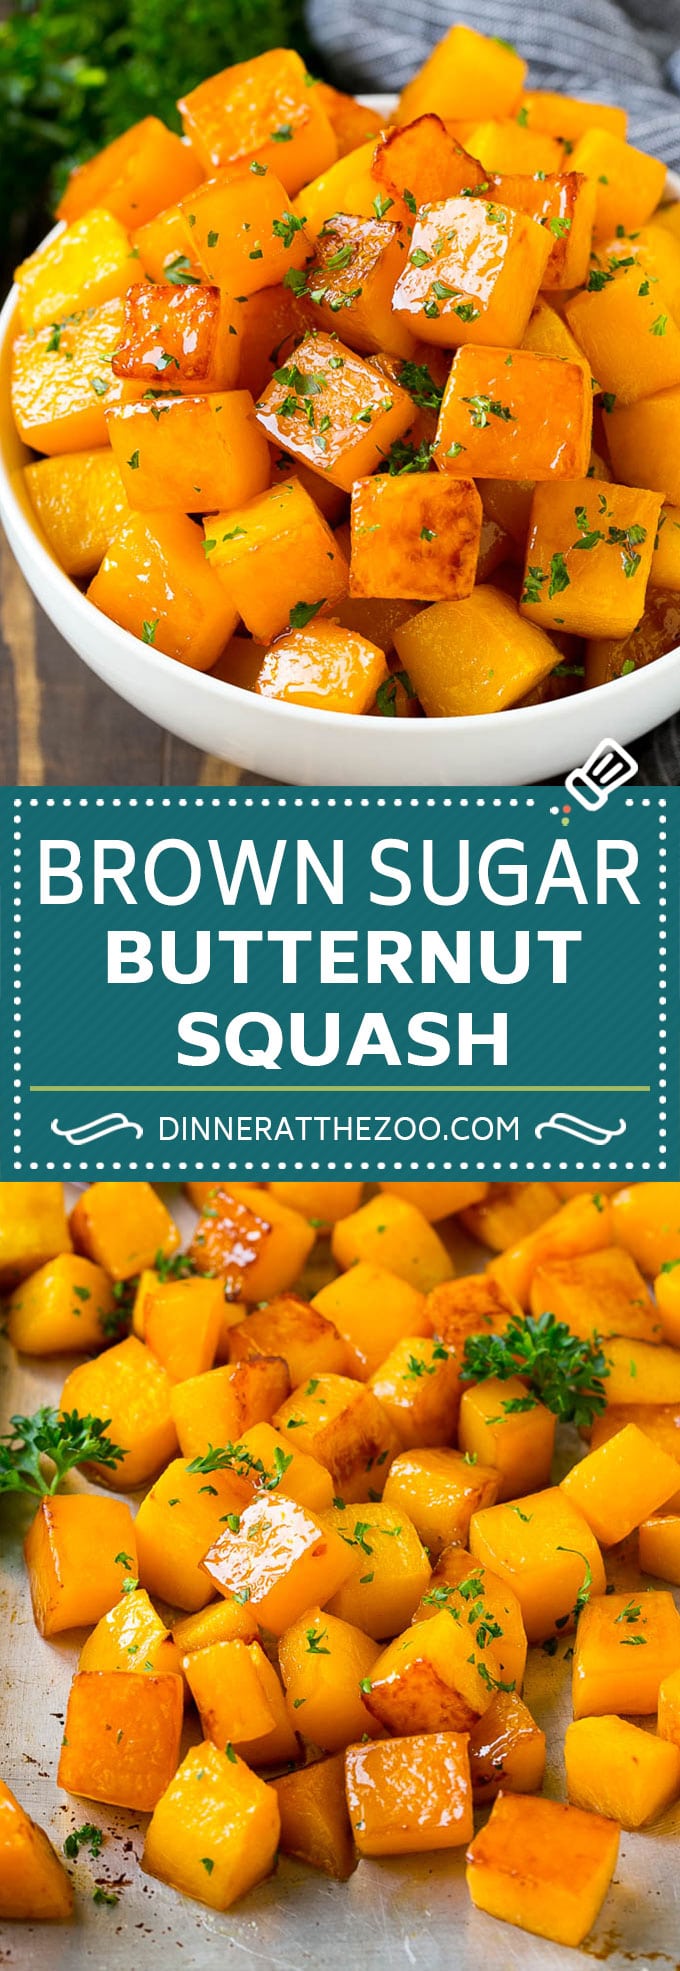 Roasted Butternut Squash Recipe | Baked Butternut Squash | Butternut Squash Side Dish #butternutsquash #squash #fall #vegetarian #dinner #dinneratthezoo